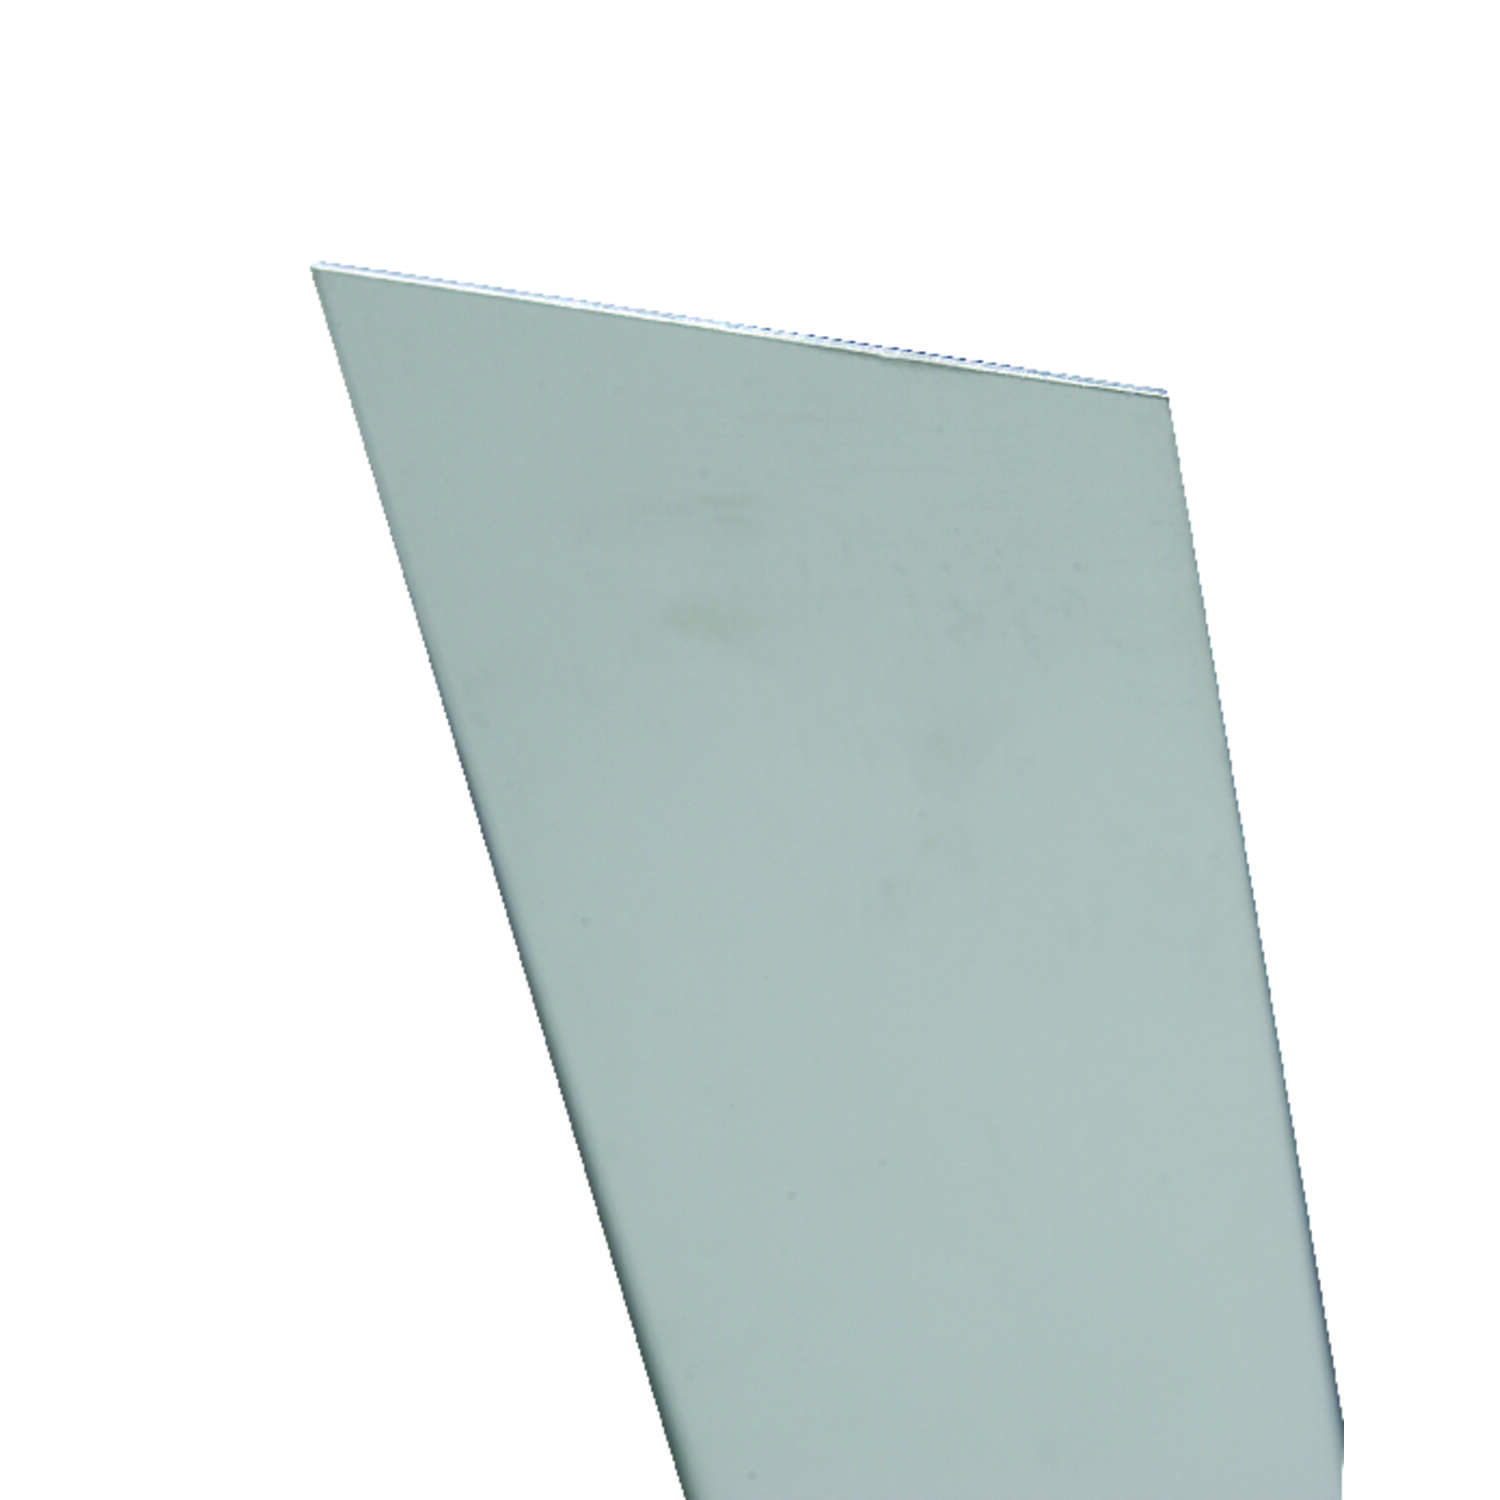 Online Metal Supply 410 Stainless Steel Sheet 0.060 x 12 x 12